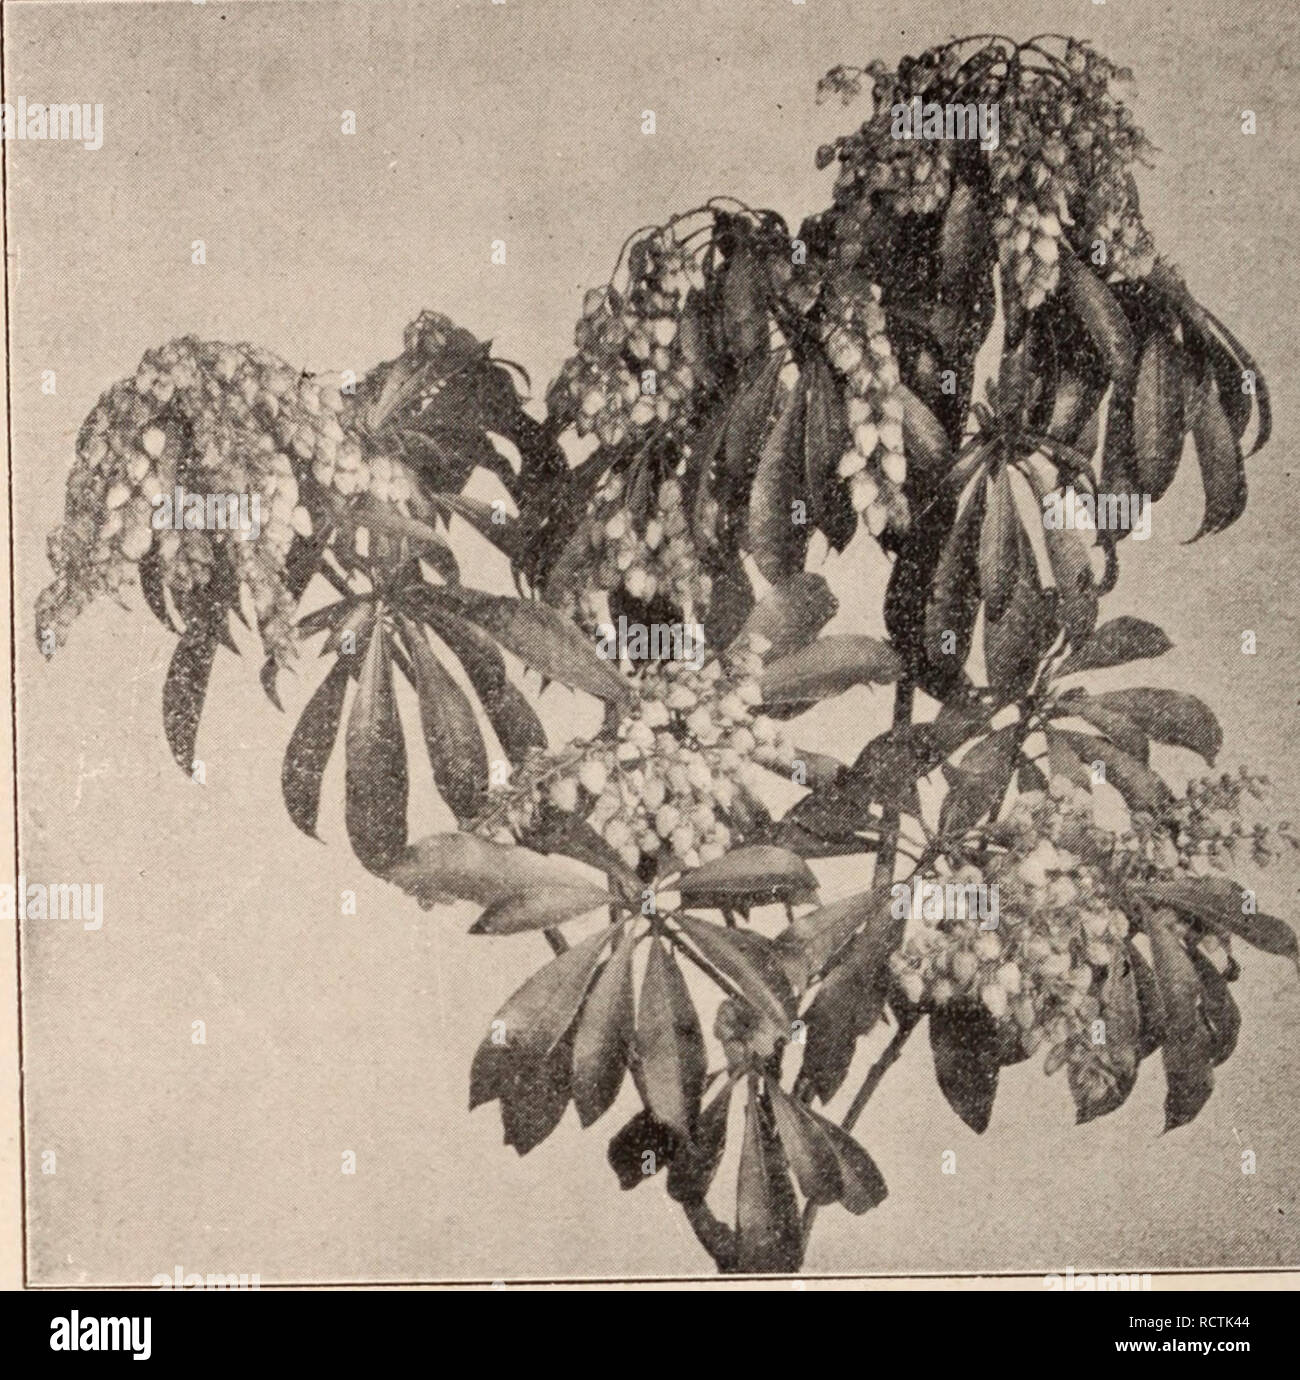 . Descriptive catalogue of flowering, ornamental trees, shrubs, bulbs, herbs, climbers, fruit trees, &amp;c., &amp;c., &amp;c. / for sale by the Yokohama Nursery Co., Limited.. Nursery Catalogue. 52 CATALOGUE OF TlIK YOKOHAMA NURSKI^Y Co., Ltd. (1913) ^Ardisiacrispa, the same with white berries ââ¢ height: 8-10 in.; per 10, $2.20 per 100, $20.00. â '^Ardisia crispfi, crape k^aves, ^rrafted towther wliite and red berries on one plantâ height: 8-10 in.; per 10, $2.50. Ardisia jjipouica, beautifLil ornamental foliage as well as red berry bearer, small shrub â height: per 10, $2.00.. ^Aralia filie Stock Photo